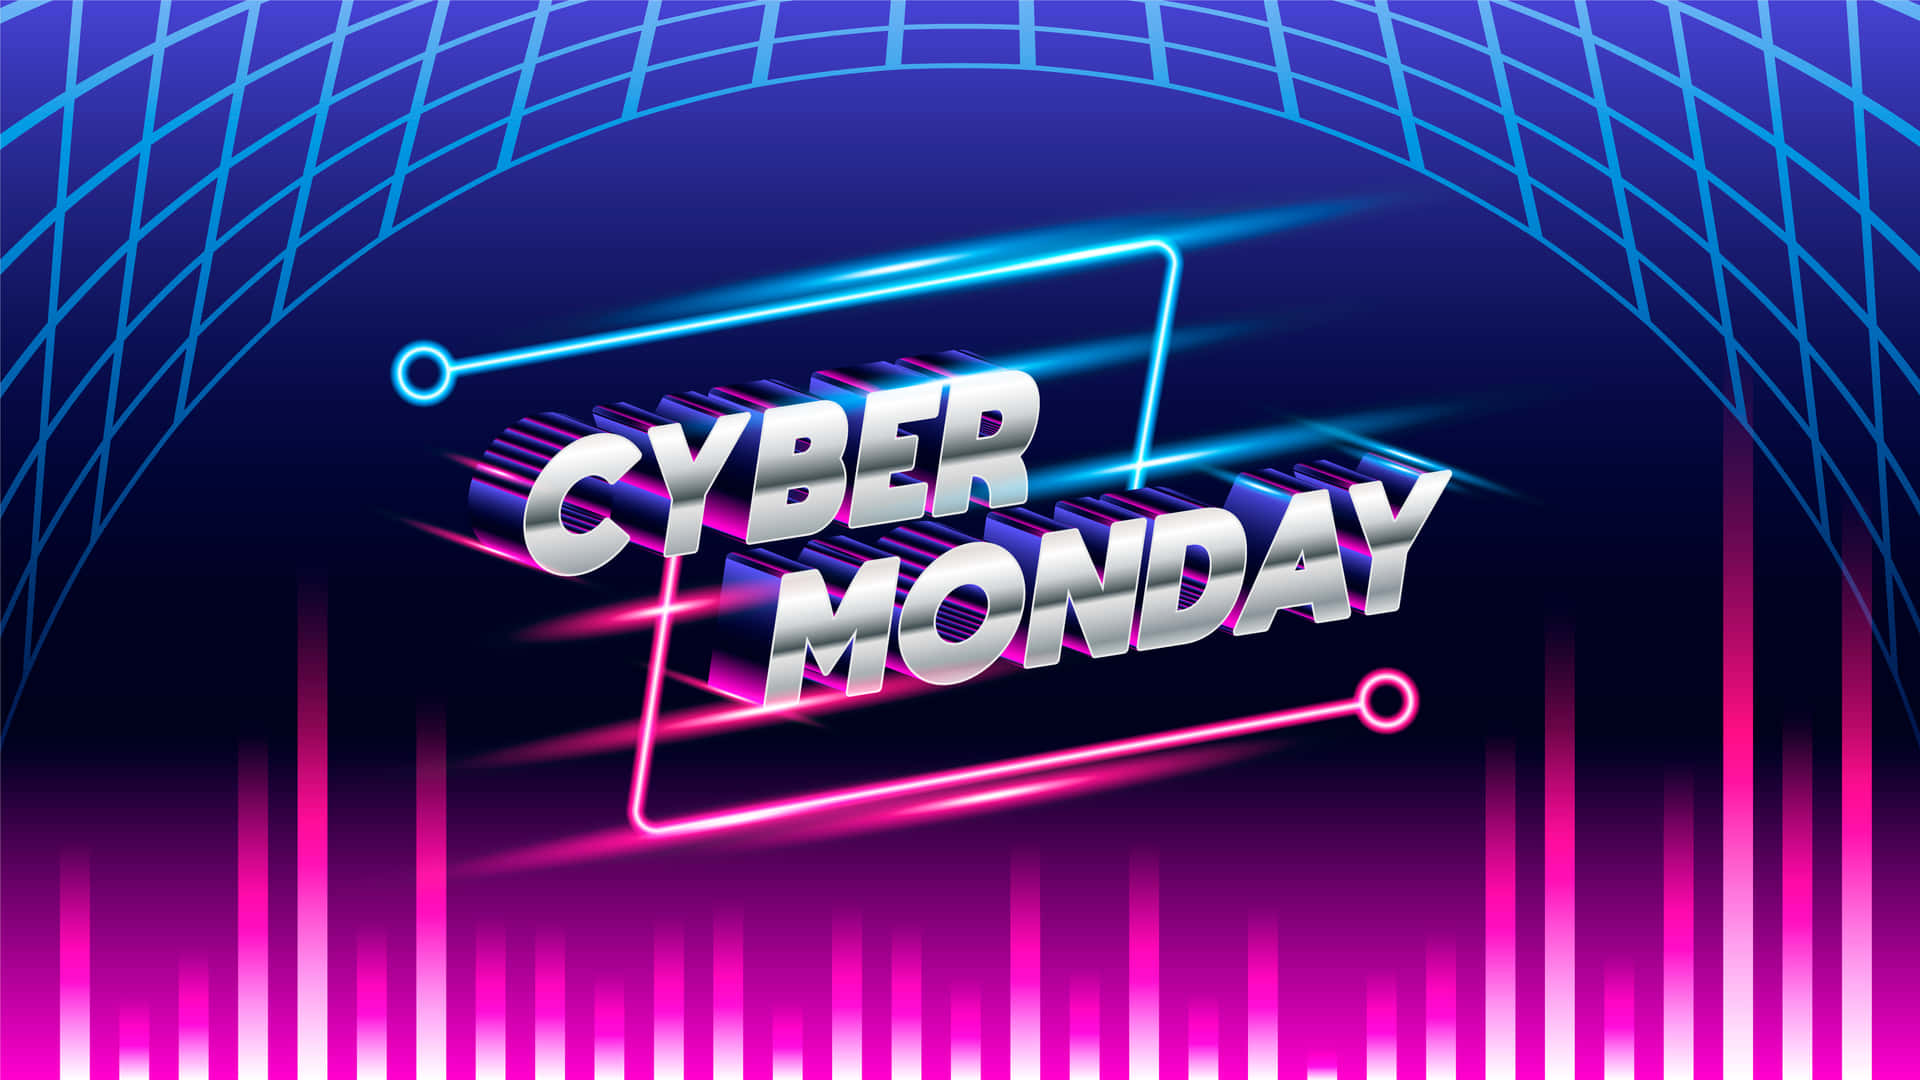 Cyber Monday Neon Lights Digital Art Picture